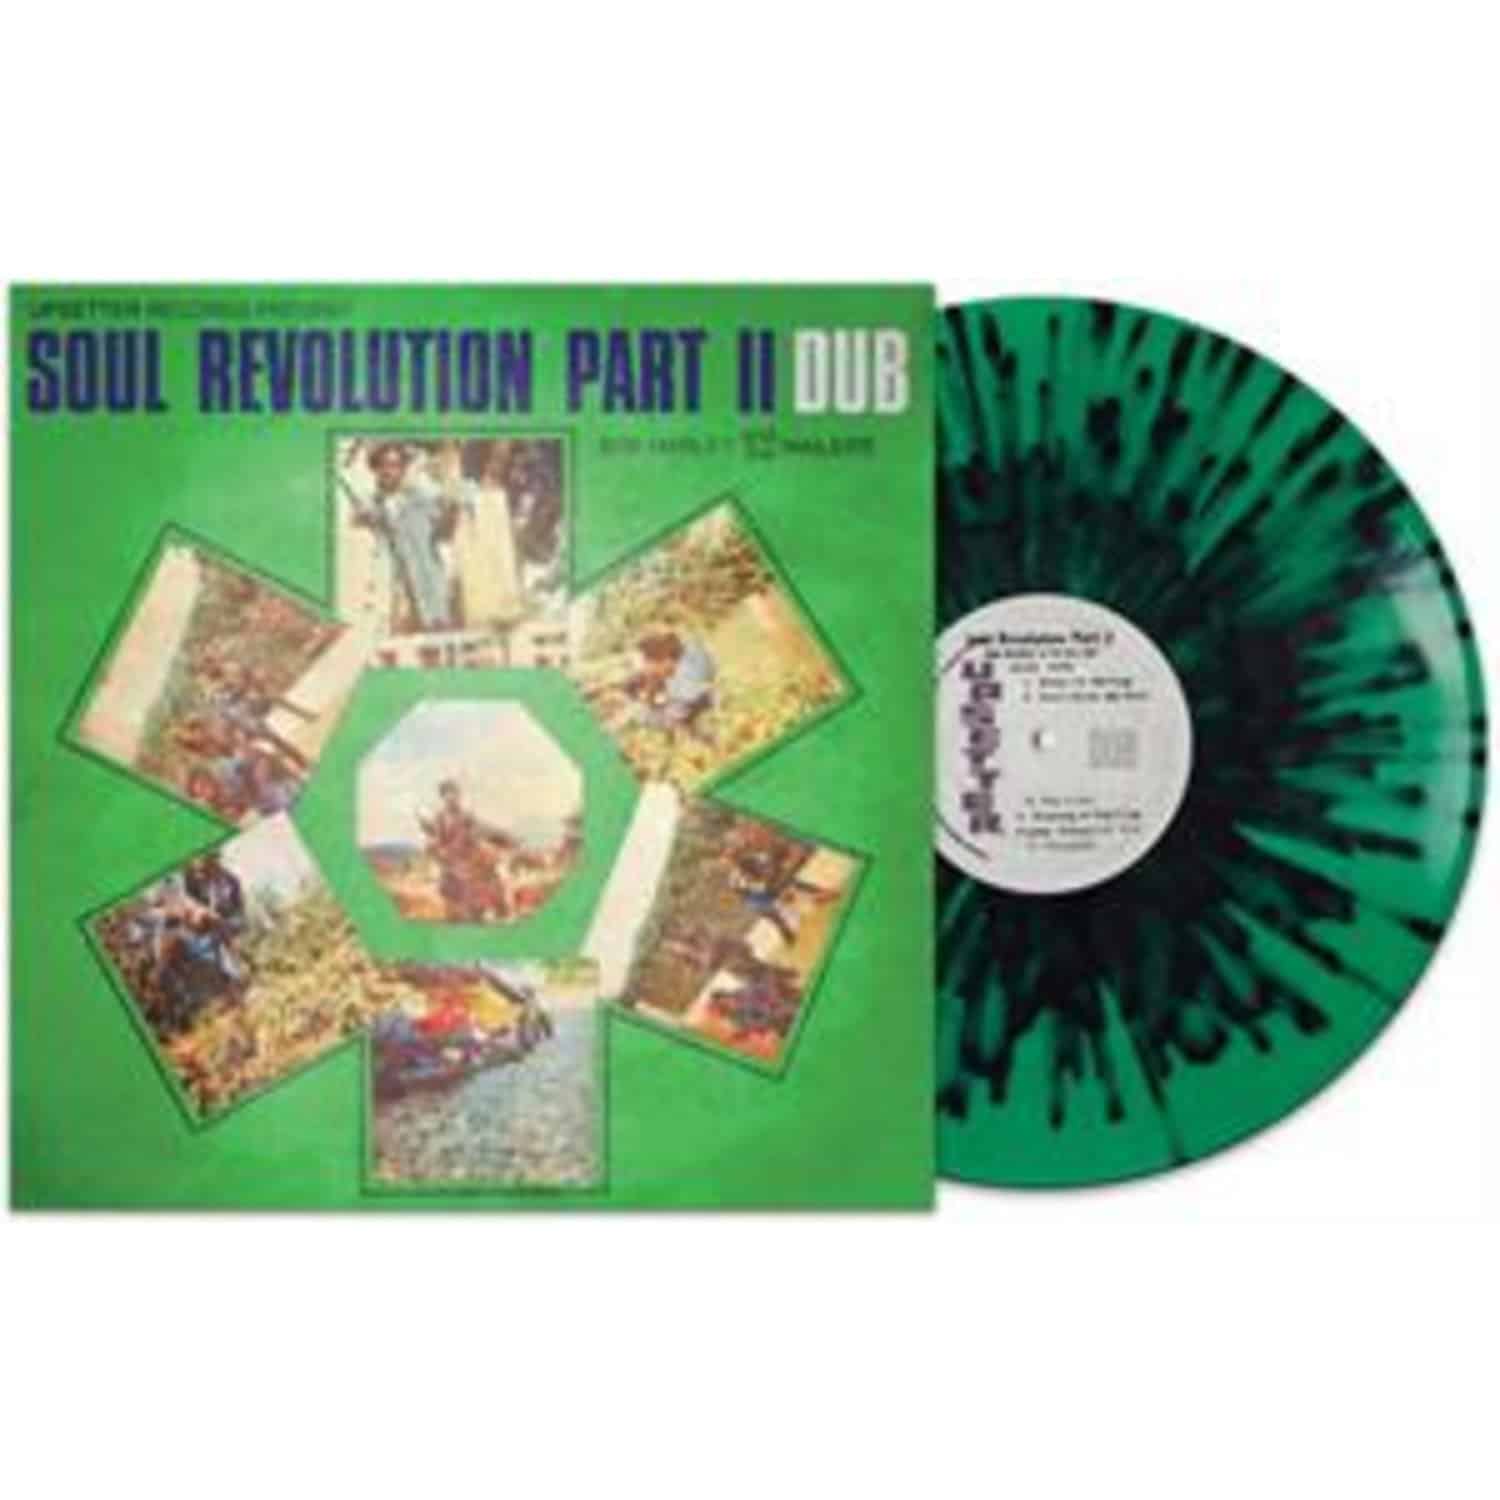 Bob Marley & The Wailer - SOUL REVOLUTION PART II 